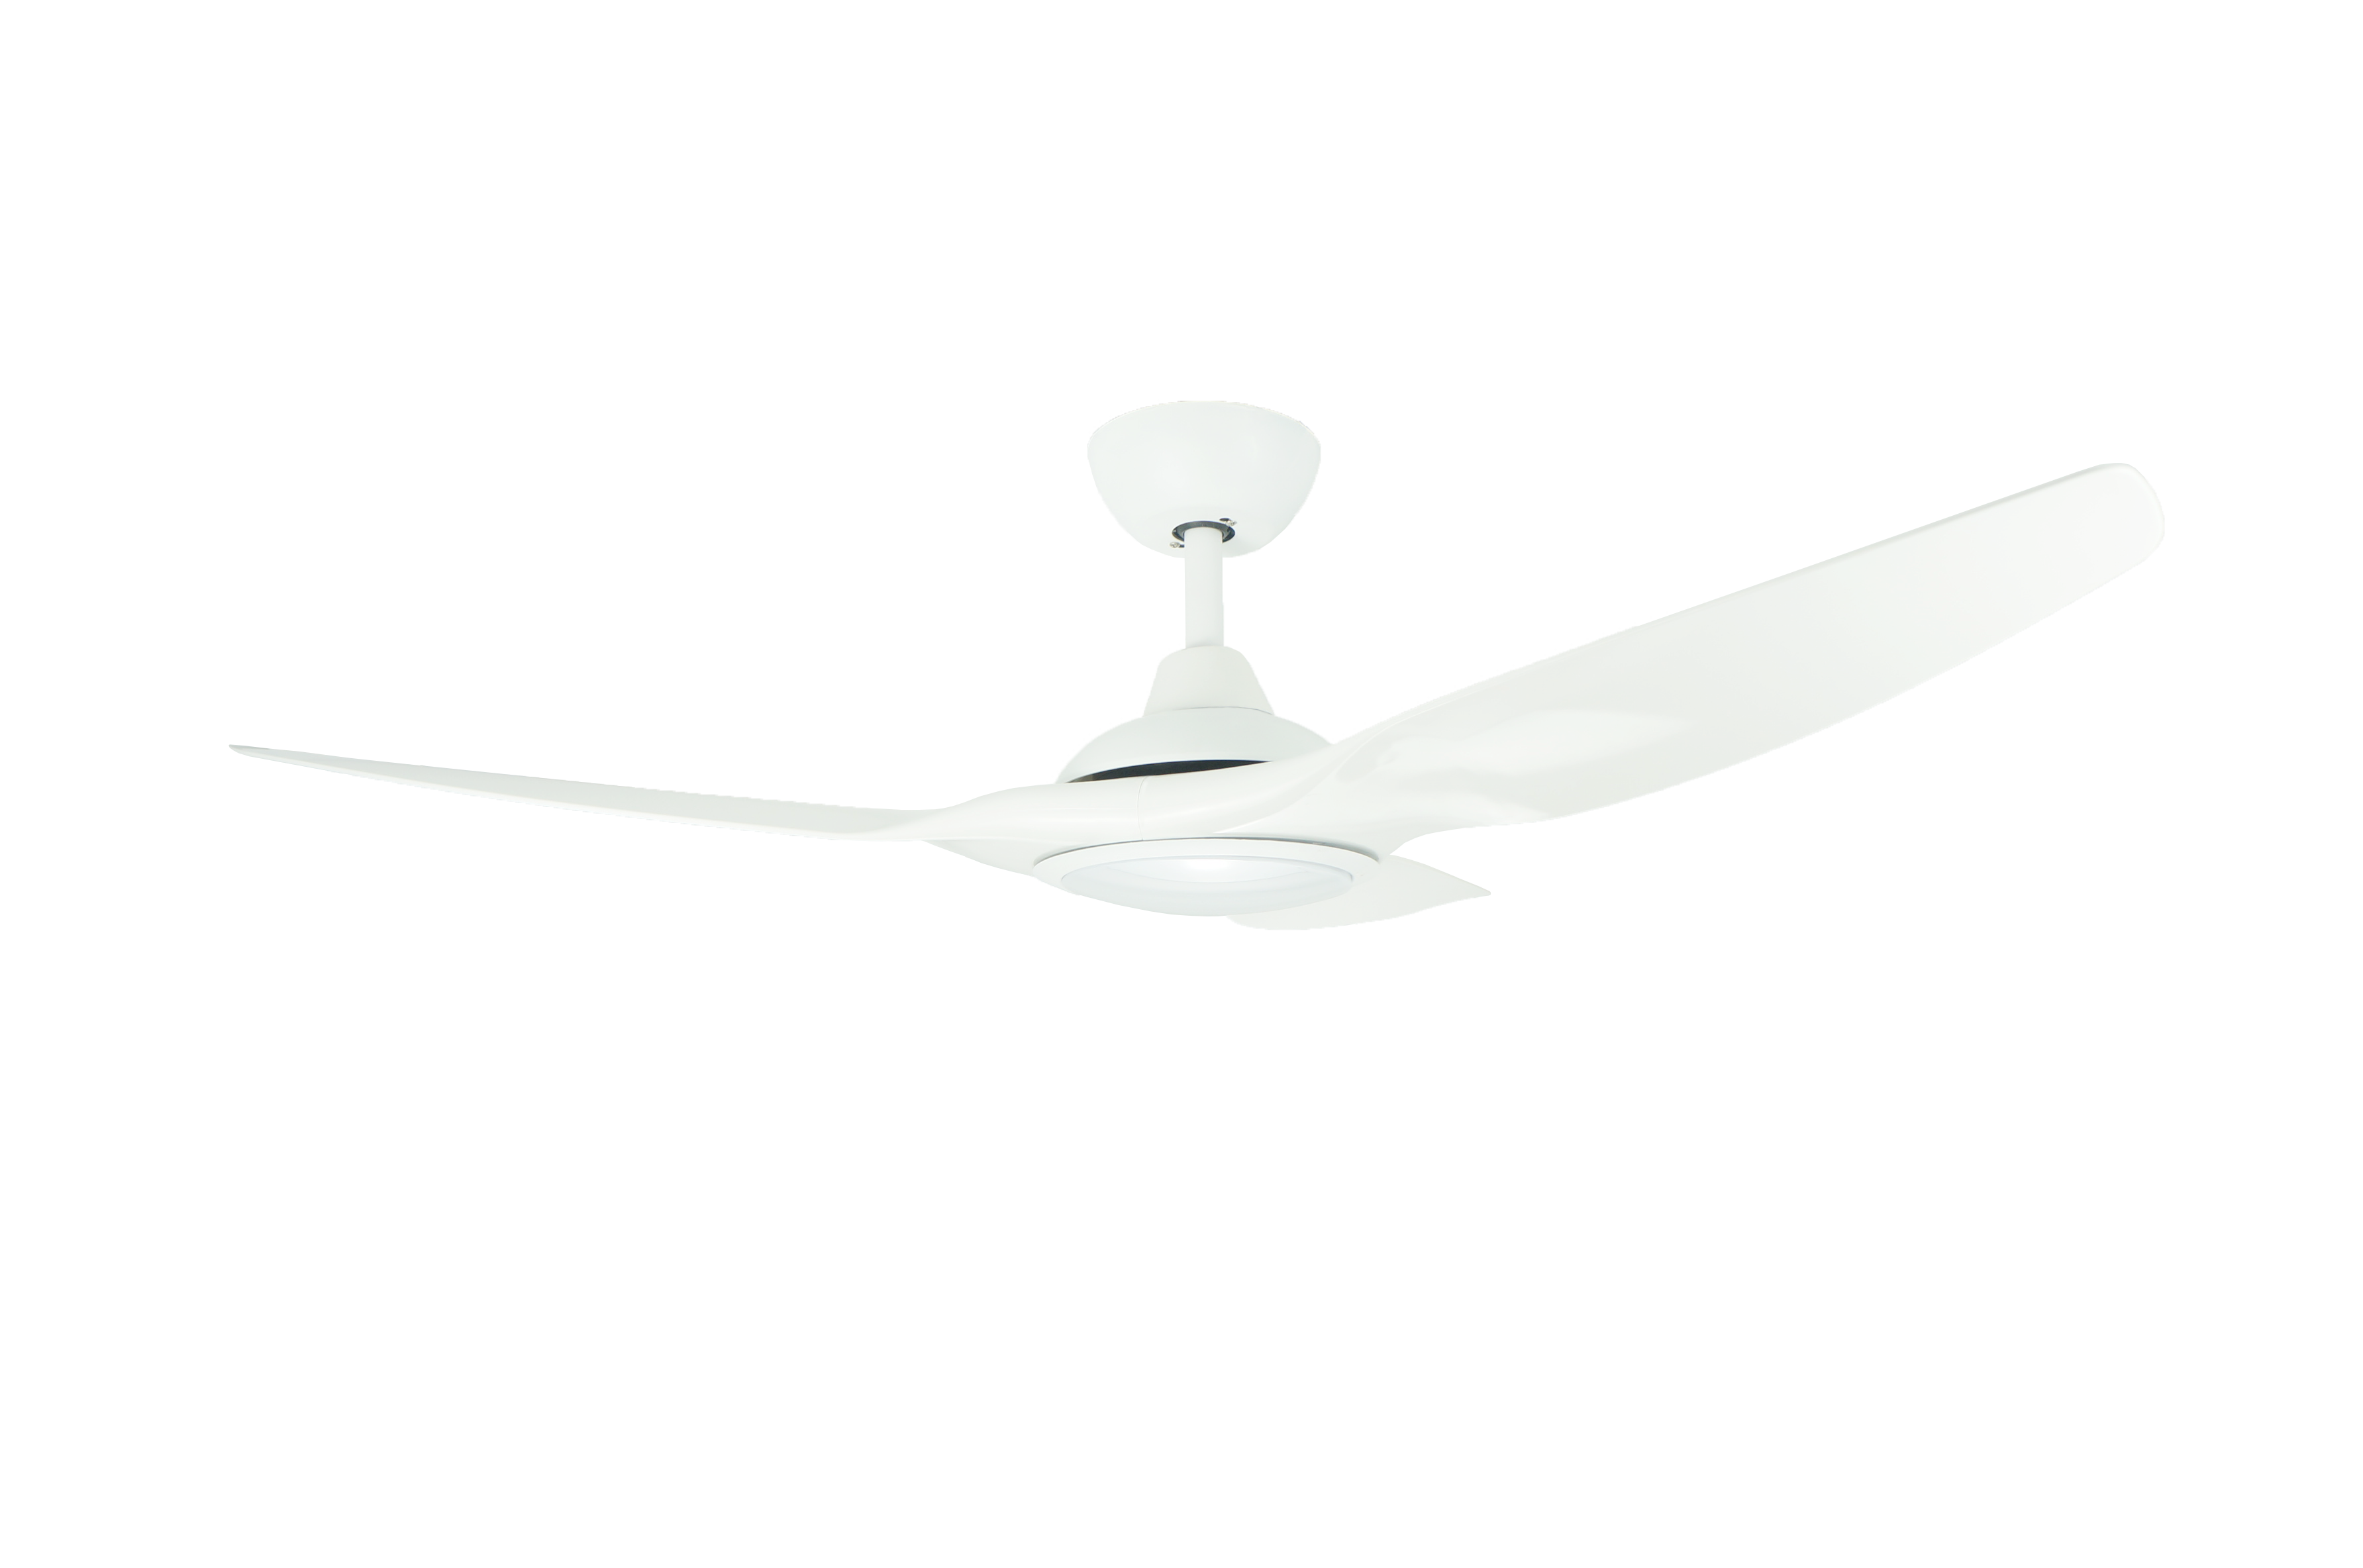 Airbena Hot Sale Design Model 3 Color Indoor Ceiling Fan